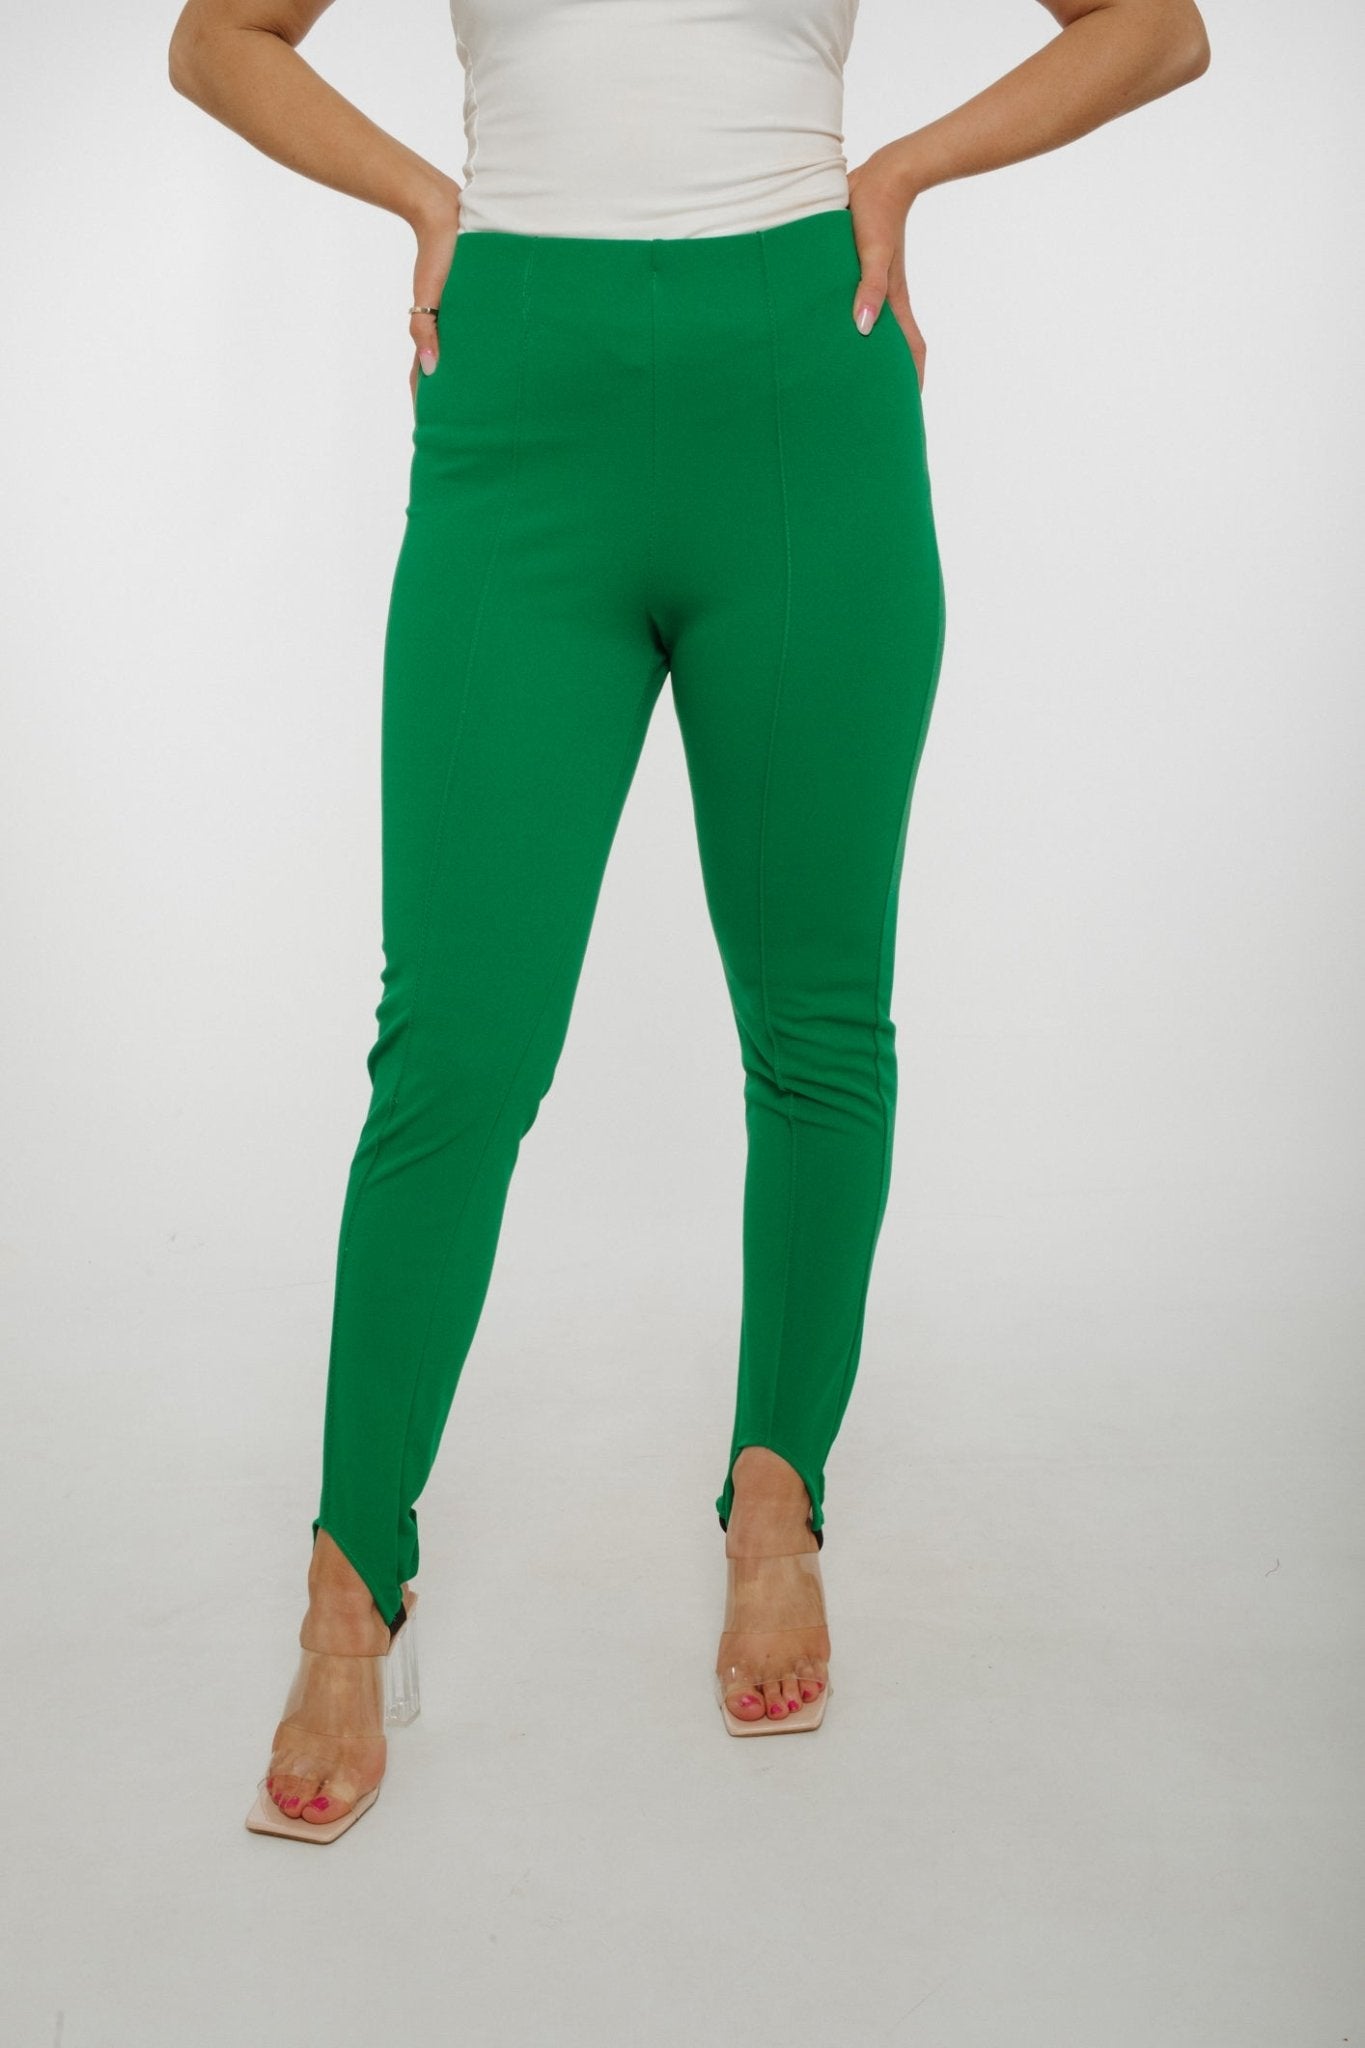 Polly Stirrup Legging In Green - The Walk in Wardrobe